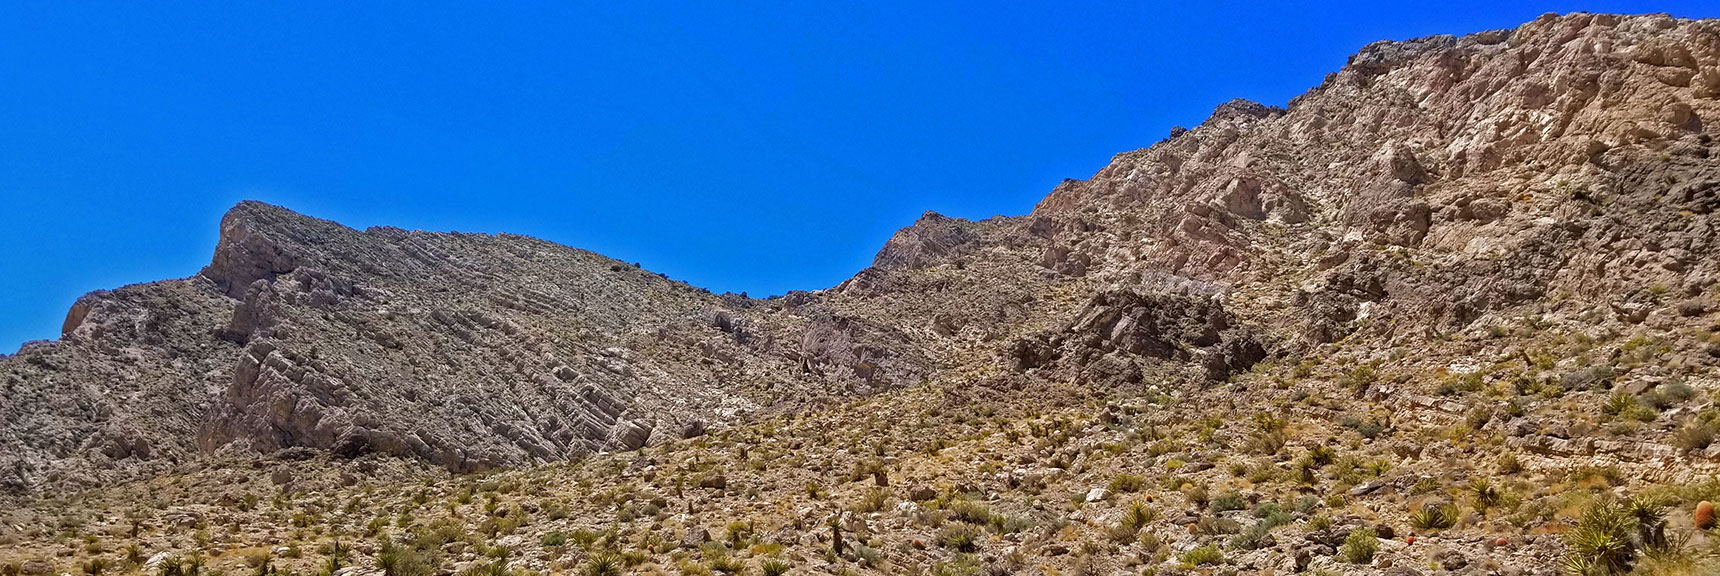 Hopeful Class 3 Approach to Launch Ramp Mountain Summit | Little La Madre Mt, Little El Padre Mt, Little Burnt Peak | Near La Madre Mountains Wilderness, Nevada